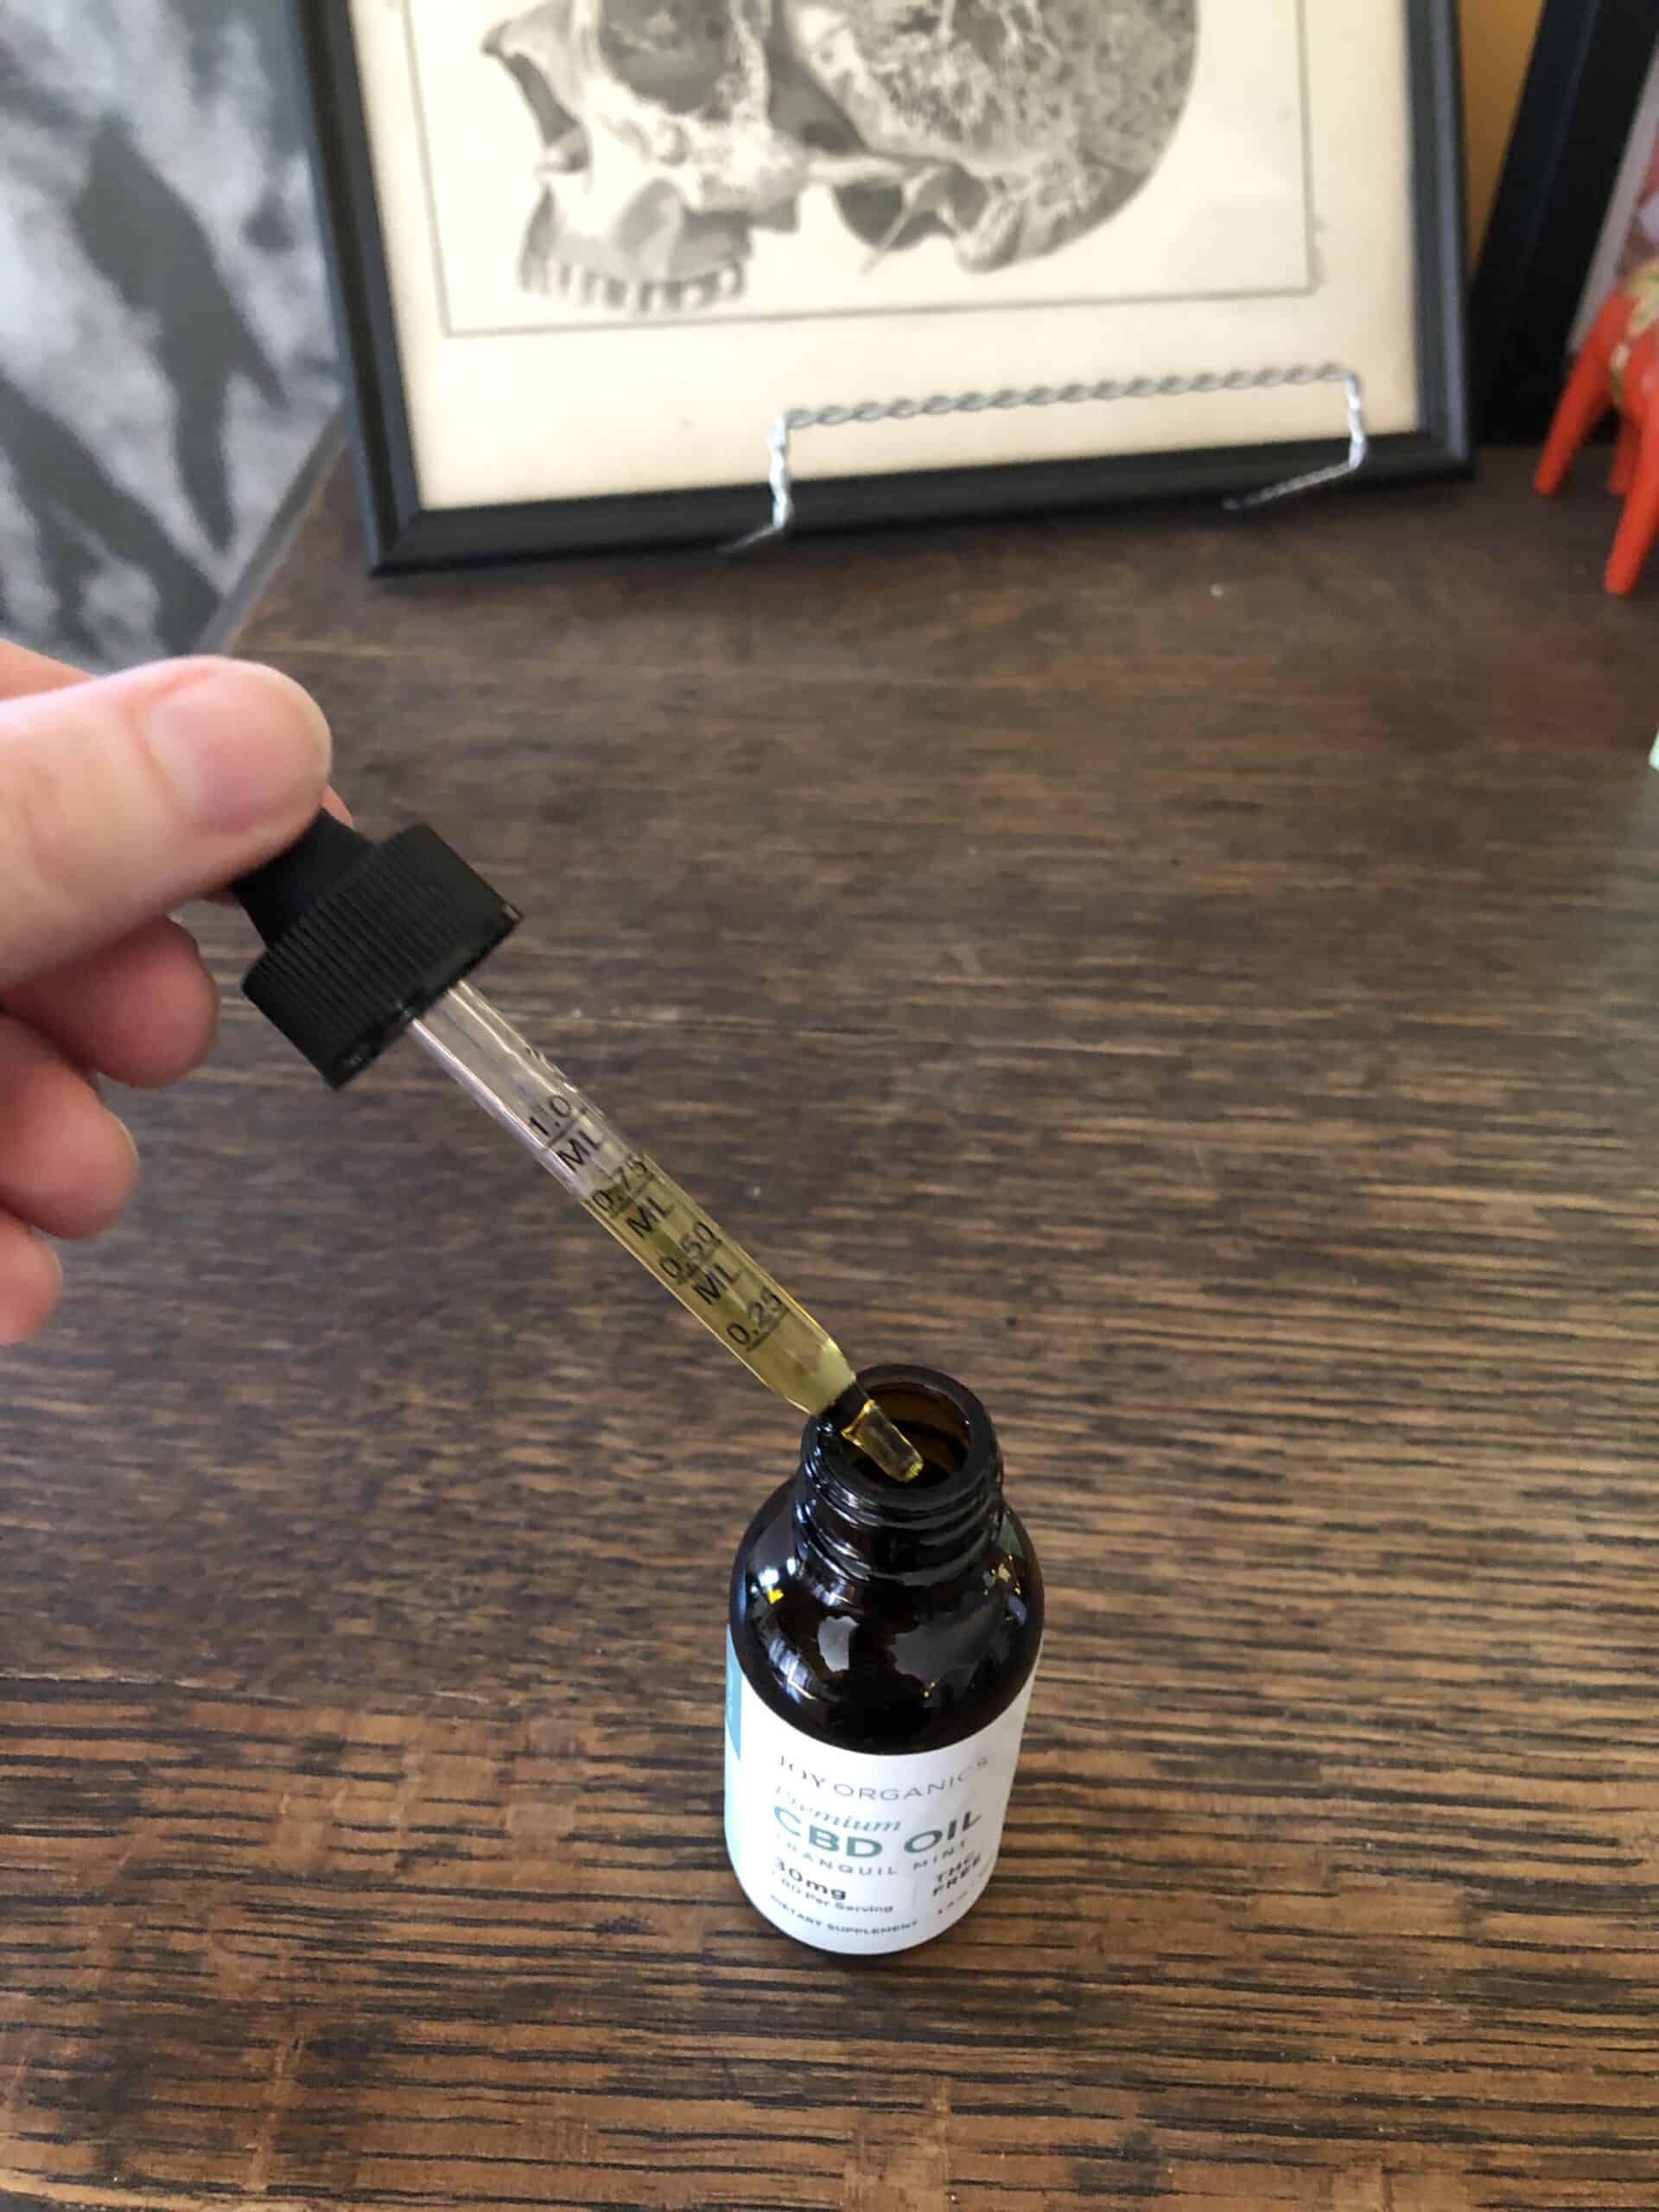 joy organics cbd oil tranquil mint 30 mg review save on cannabis testing process